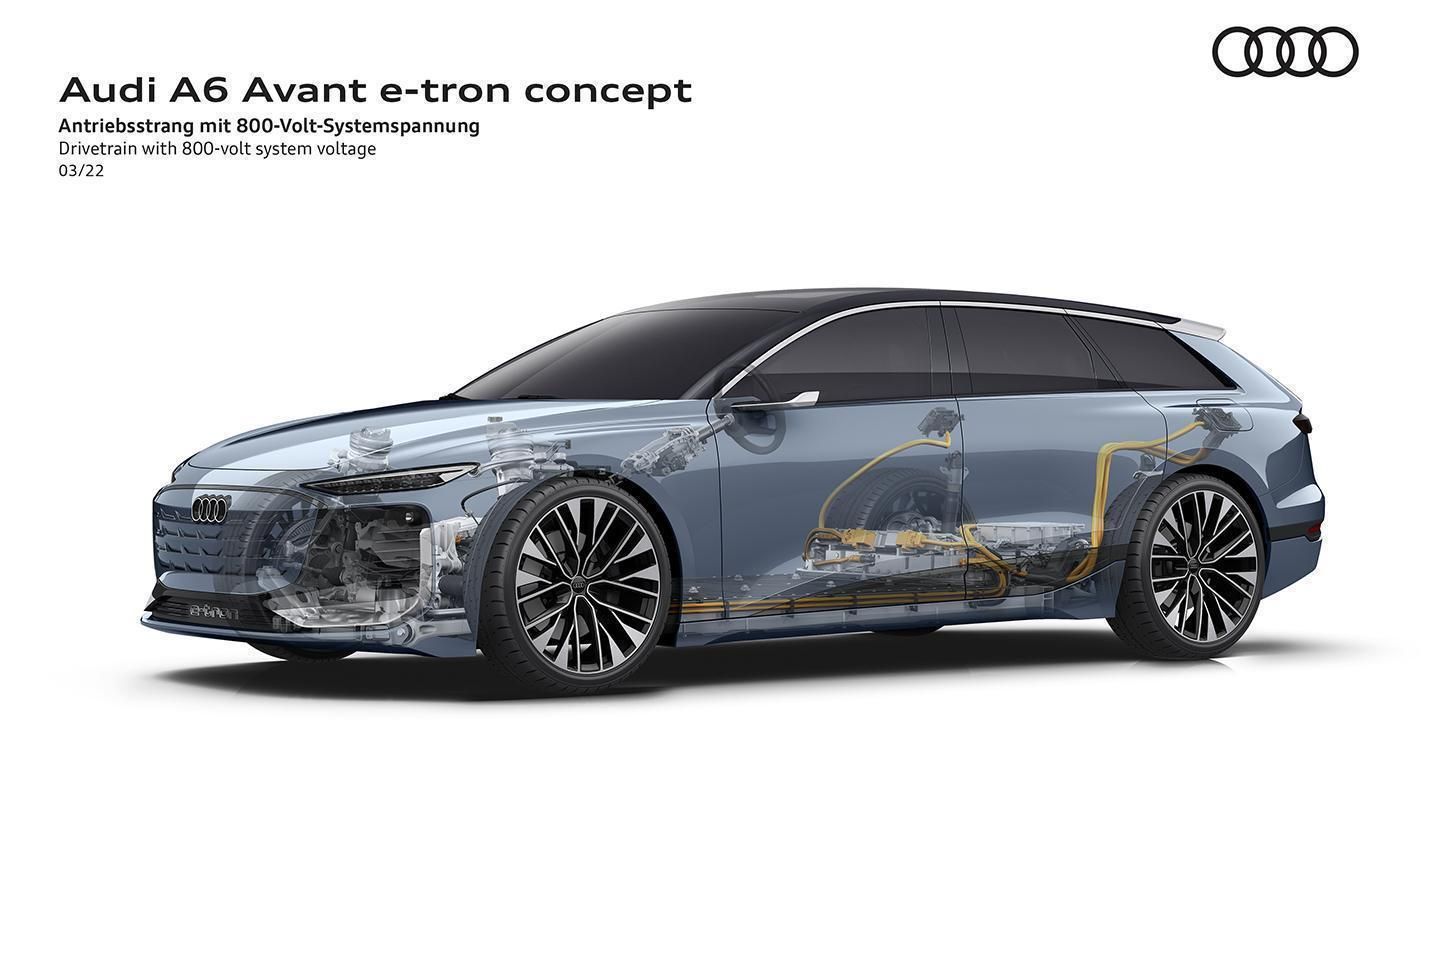 Audi shows stunning A6 Avant e-tron concept - PistonHeads UK